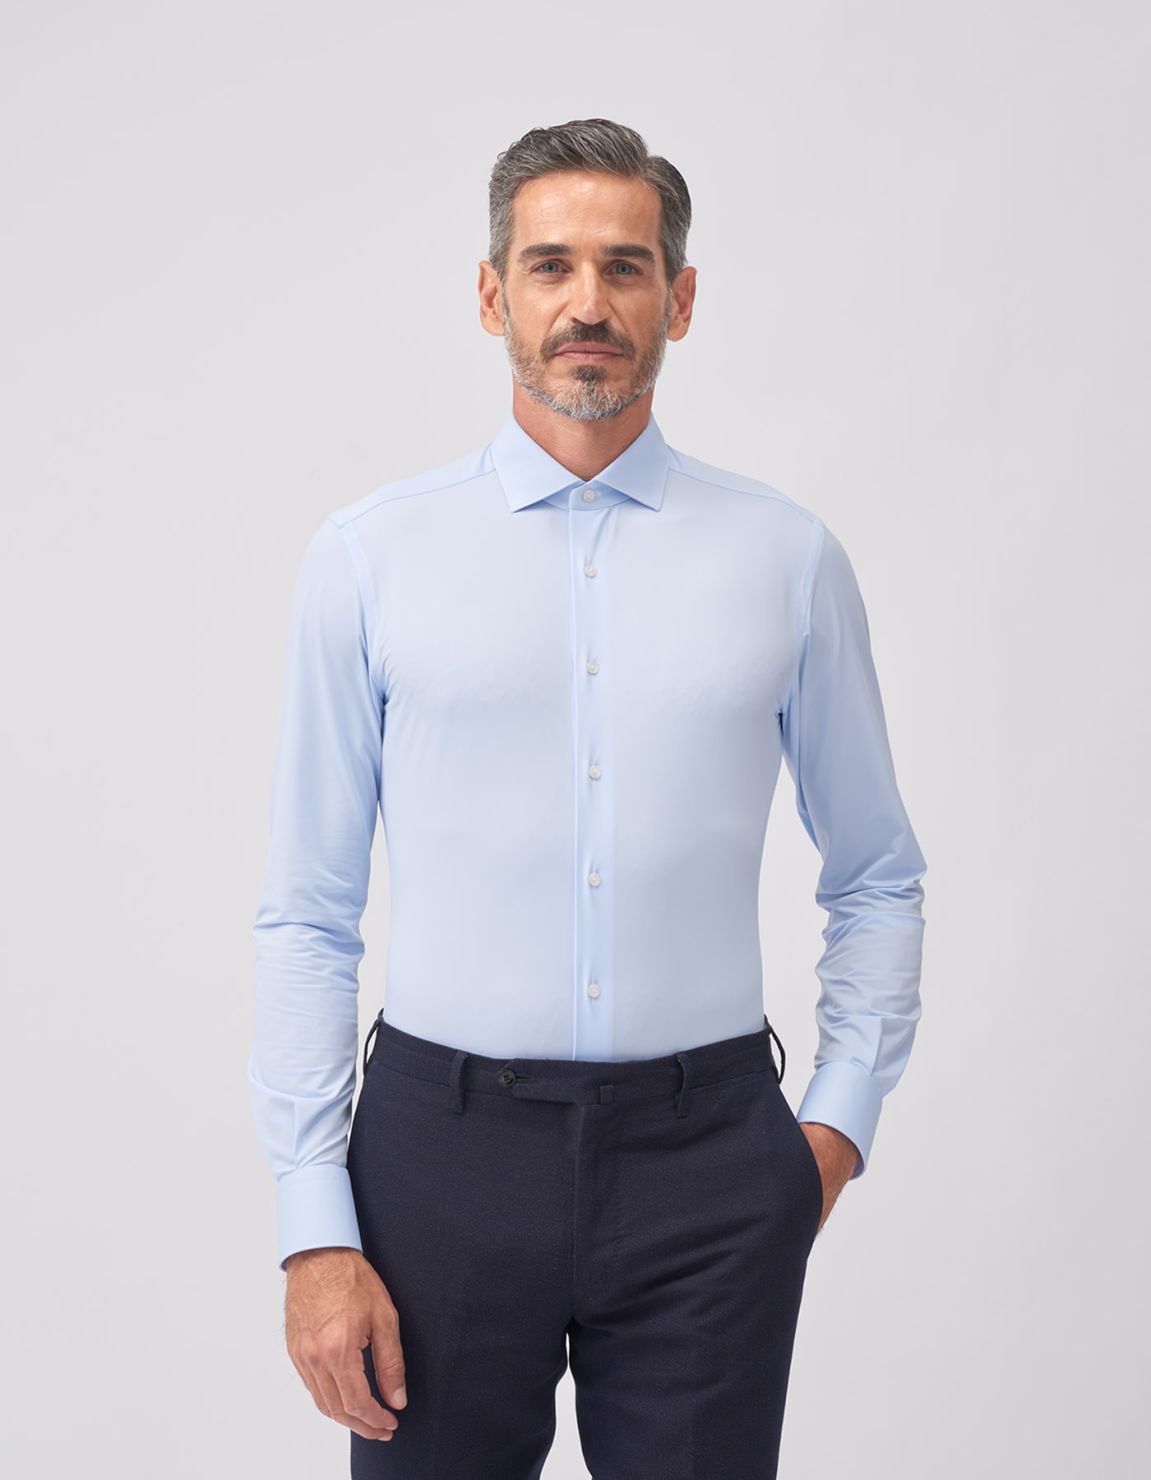 Shirt Collar small cutaway Light Blue Oxford Tailor Custom Fit 6